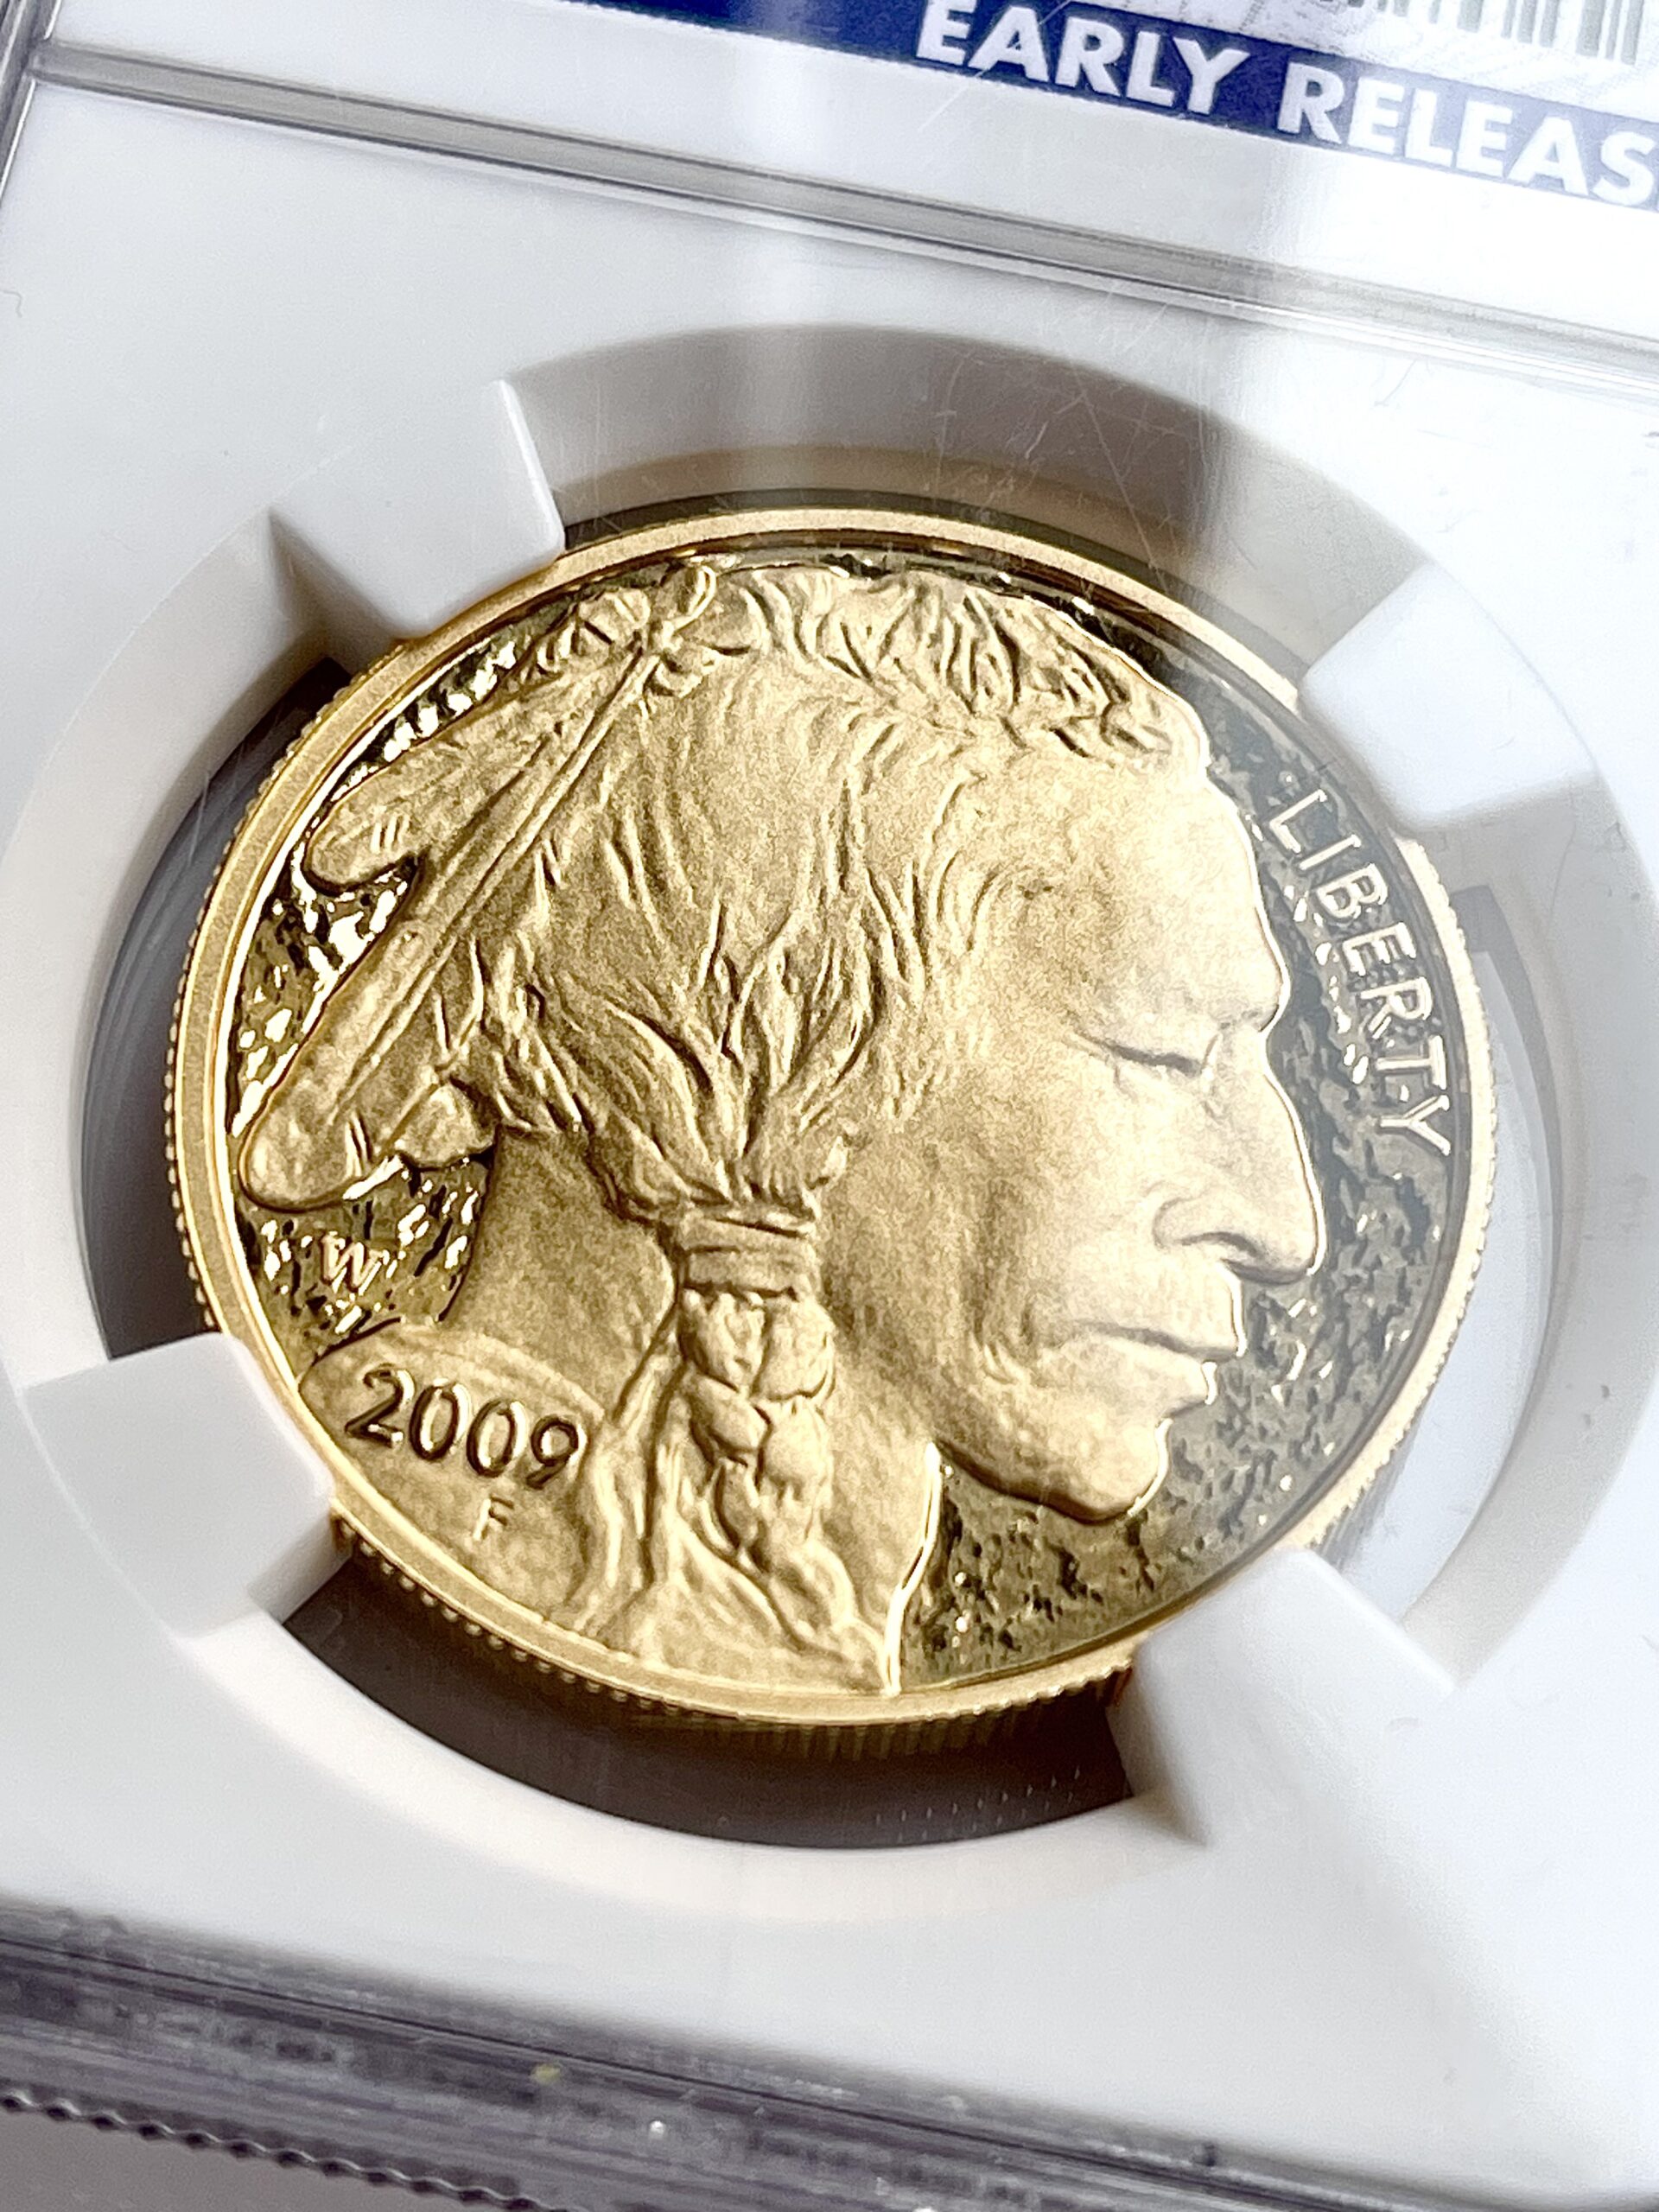 États-Unis American Buffalo Gold 2009, versions anticipées NGC PF70 UCAM